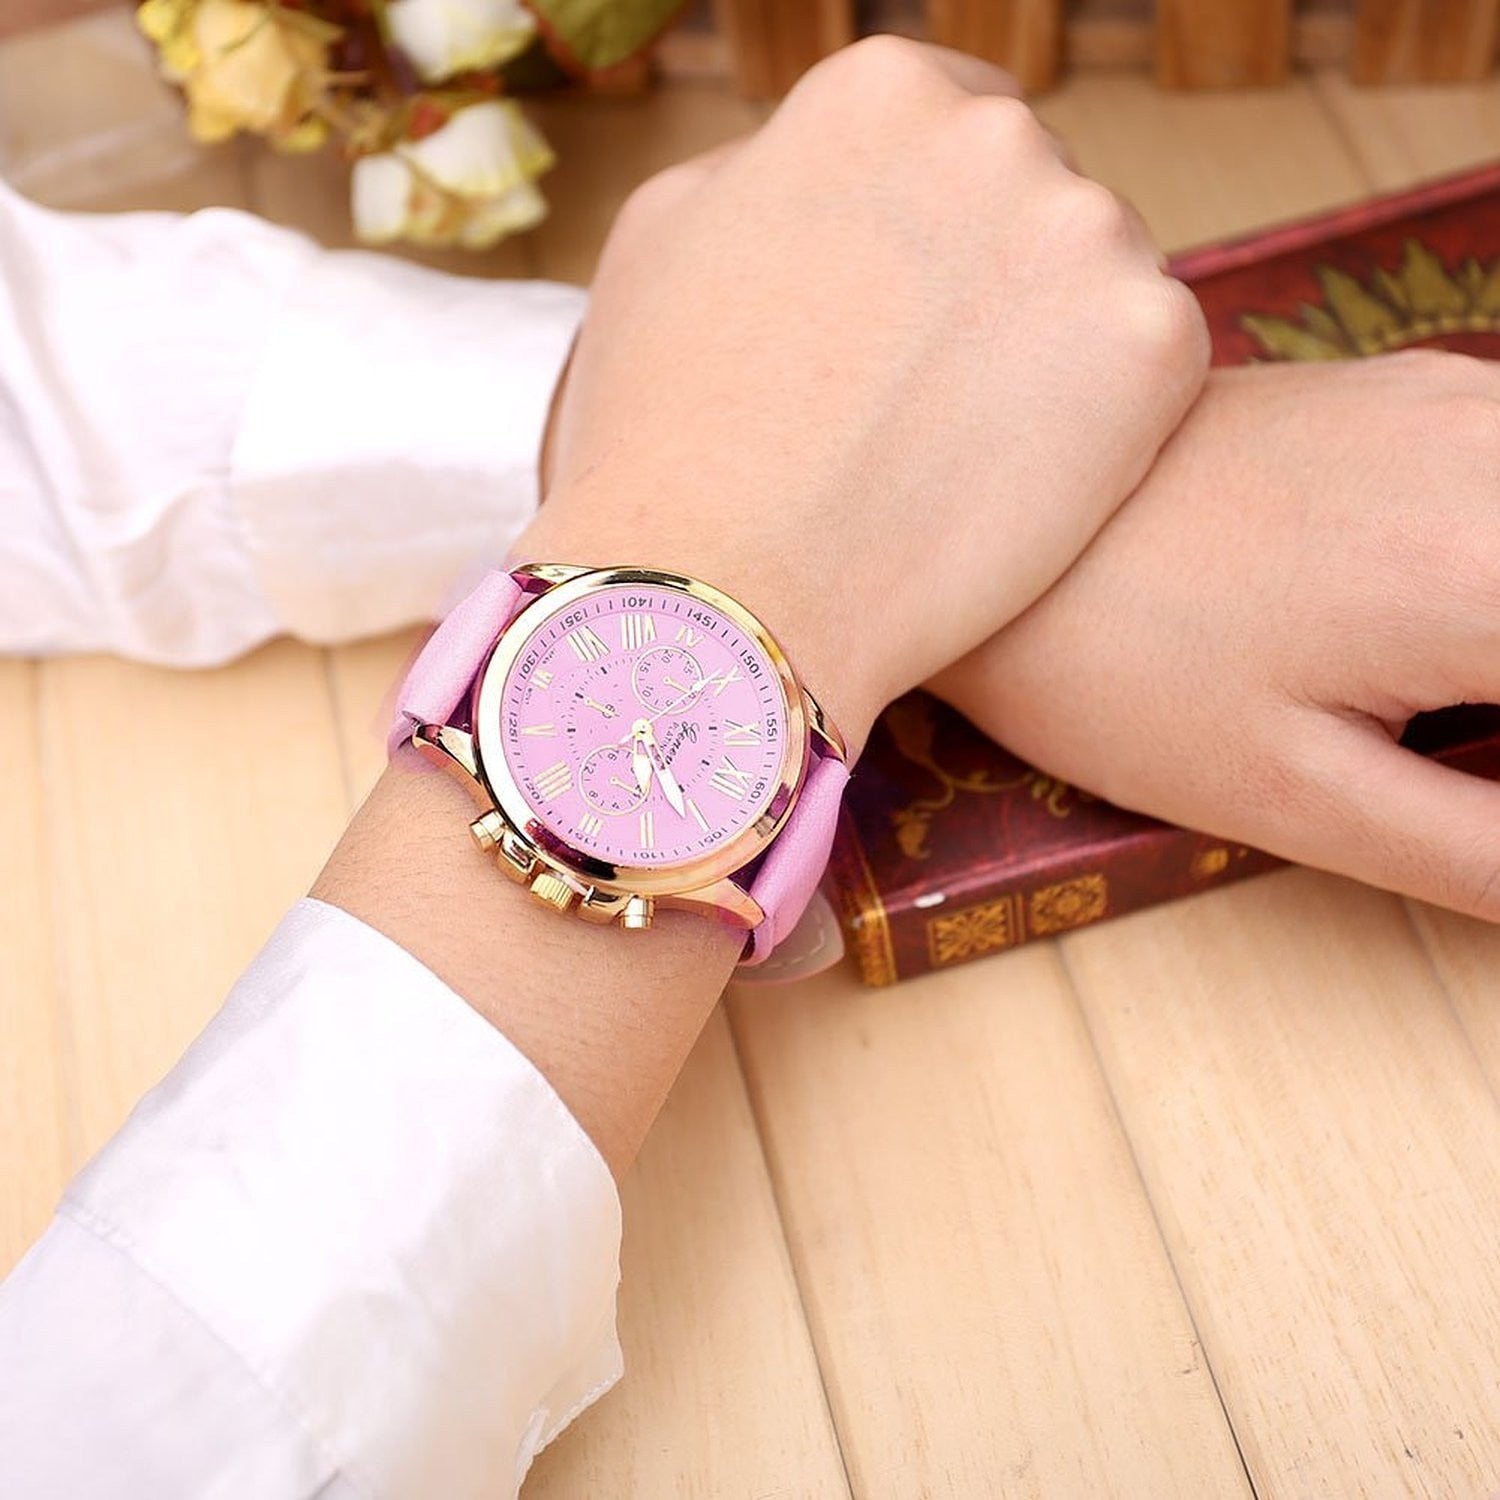 Fashion Roman Numerals Watches Women s Clock Geneva Leather Strap Analog Quartz Watch Ladies Casual Pink d04b2ee8 eb2d 4eb8 9536